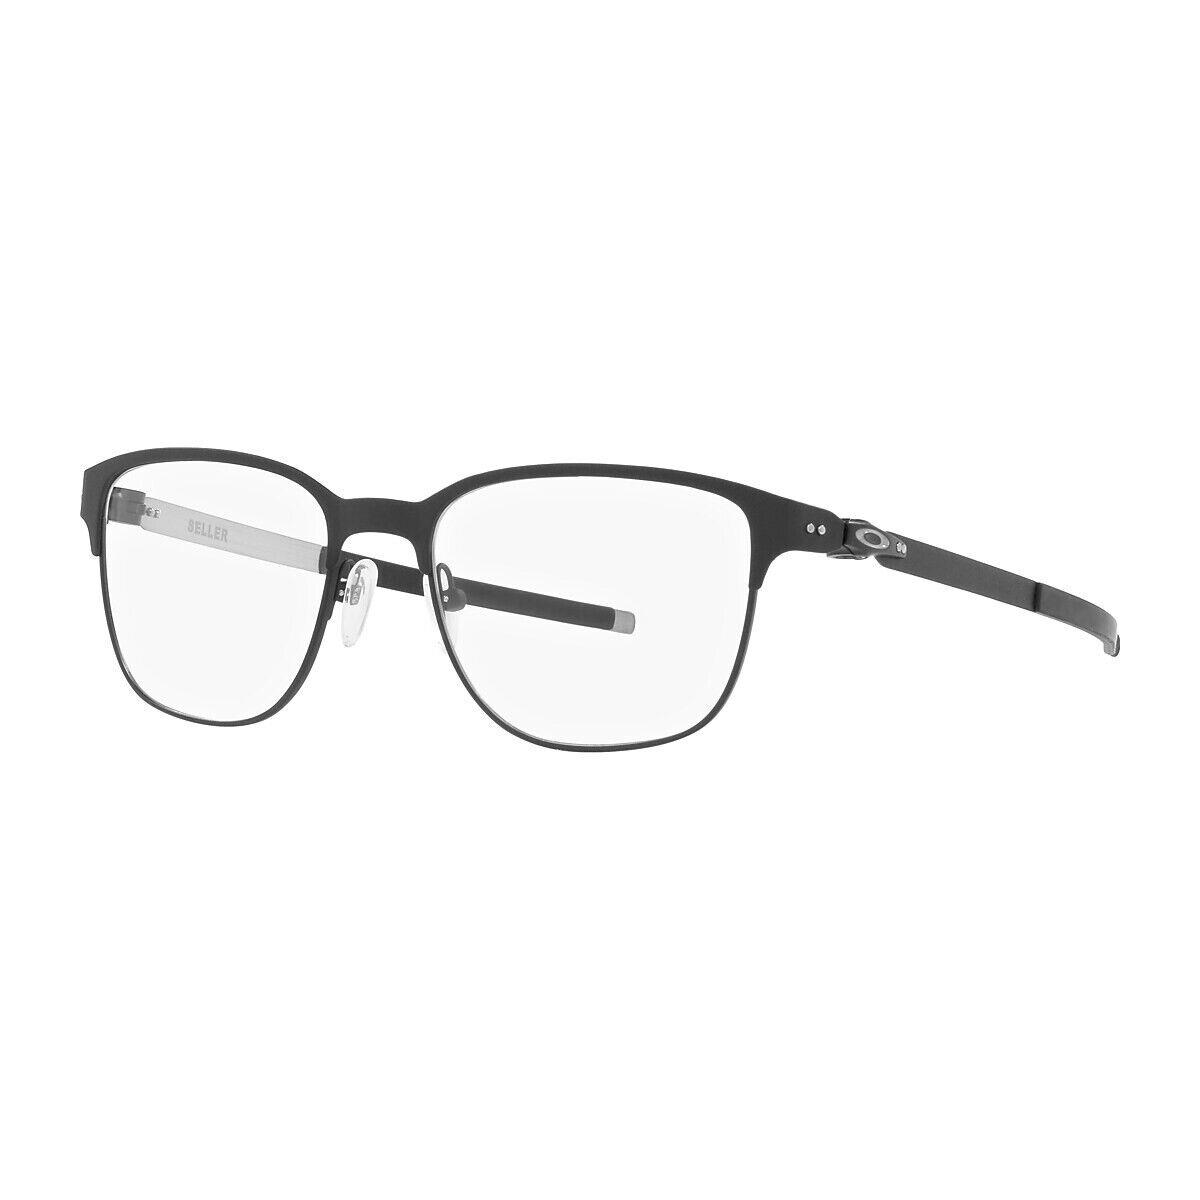 Oakley OX3248-0152 Powder-coal Black Square Eyeglasses Metal Frame 52-18-140